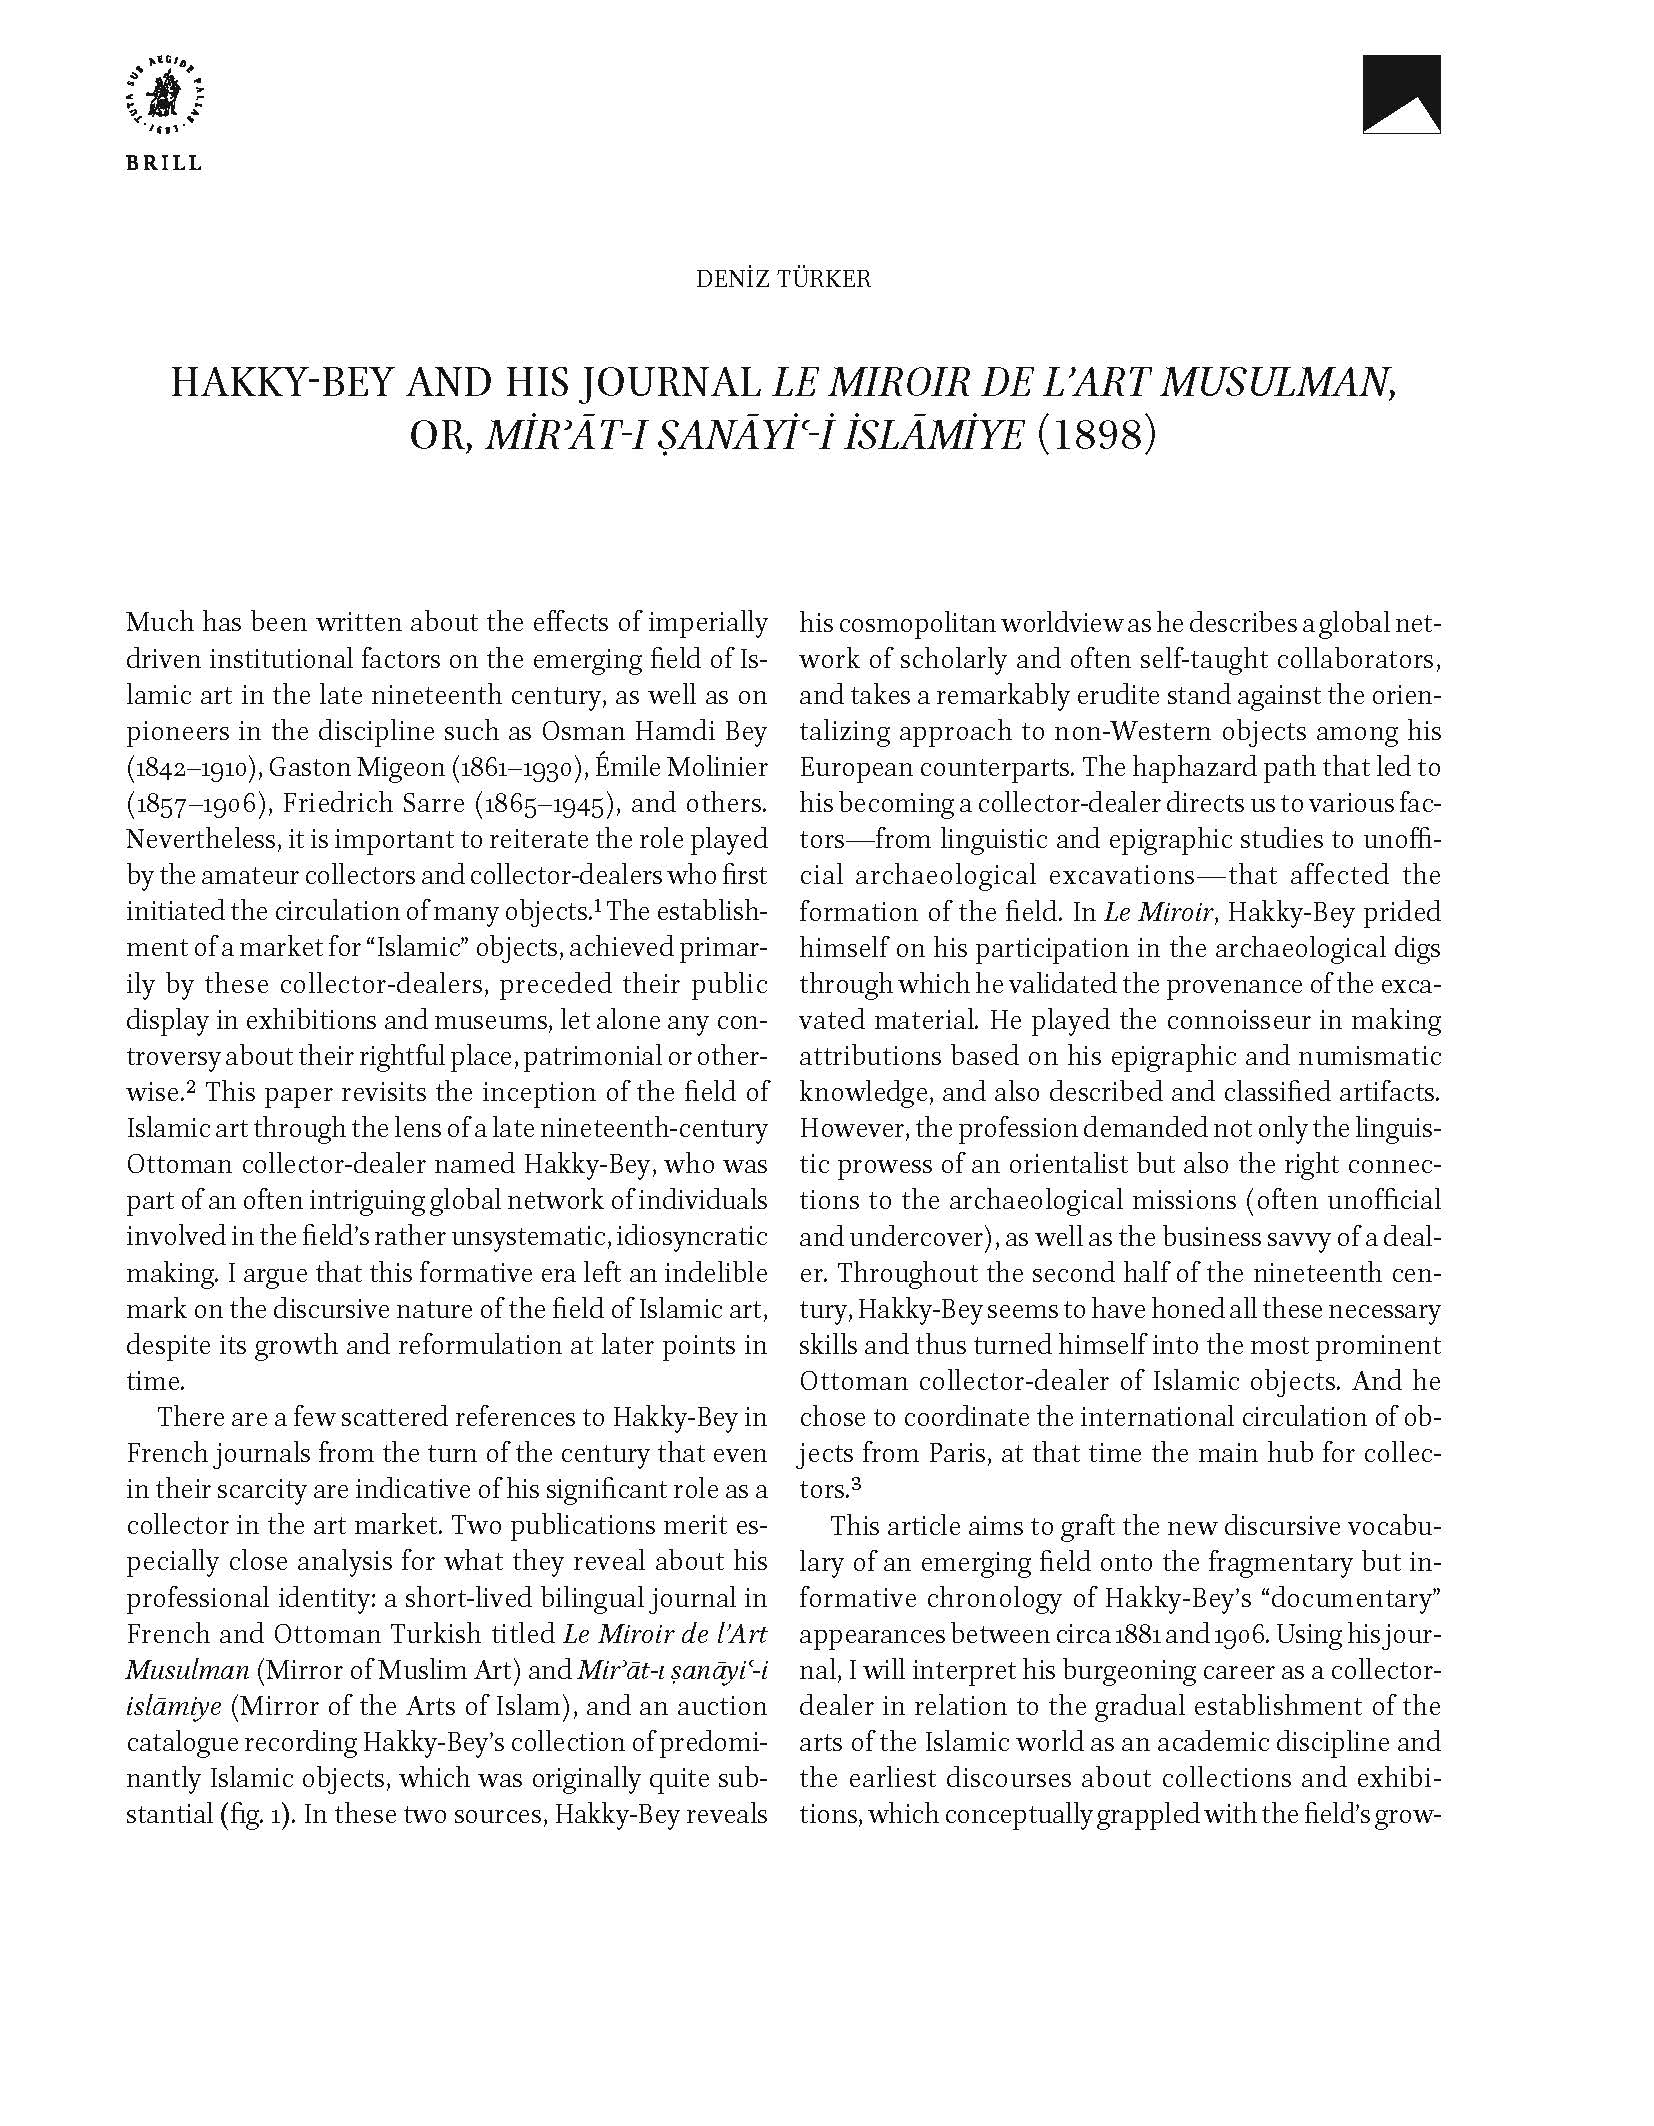 Hakky-Bey and His Journal Le Miroir de l’Art Musulman, or, Mir'āt-ı ṣanāyi'-i islāmiye